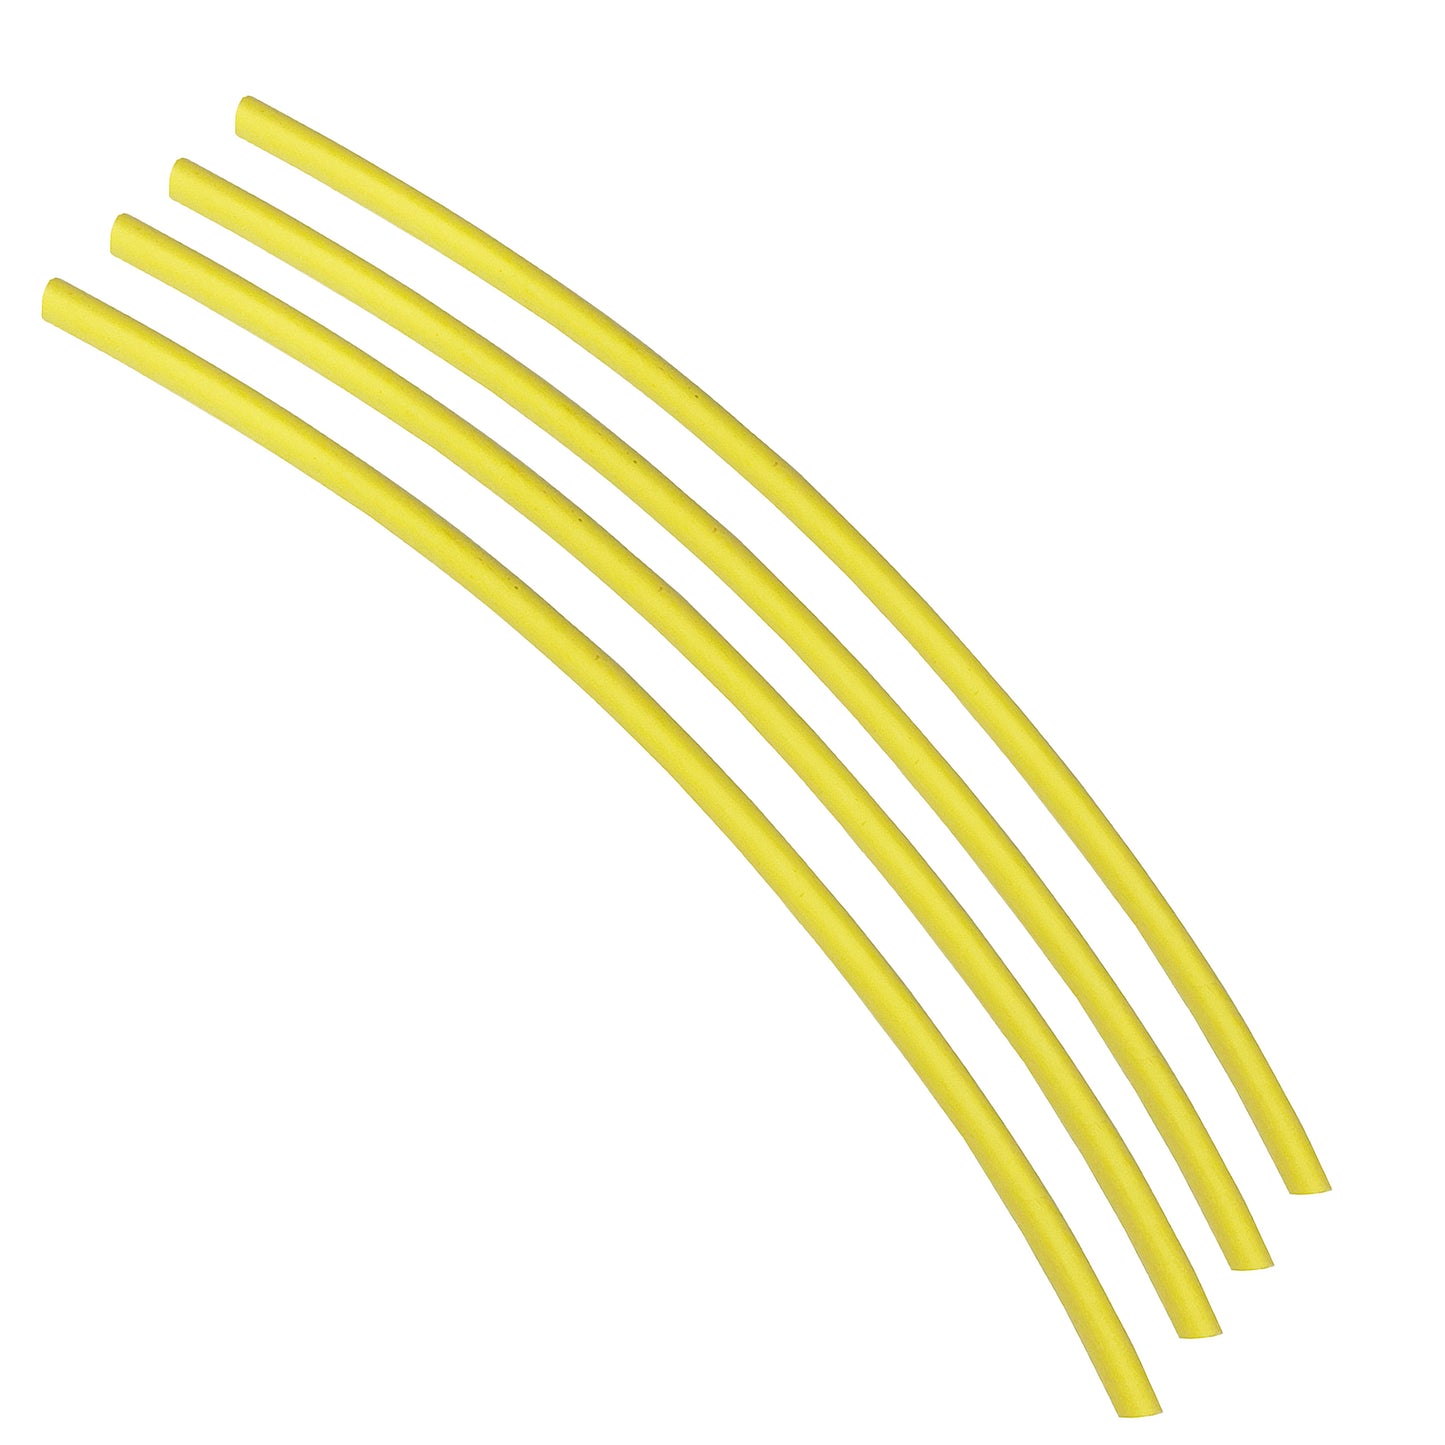 Flexible Thin Single Wall Non-Adhesive Heat Shrink Tubing 2:1 Yellow 3/32" ID - 25' Ft Spool